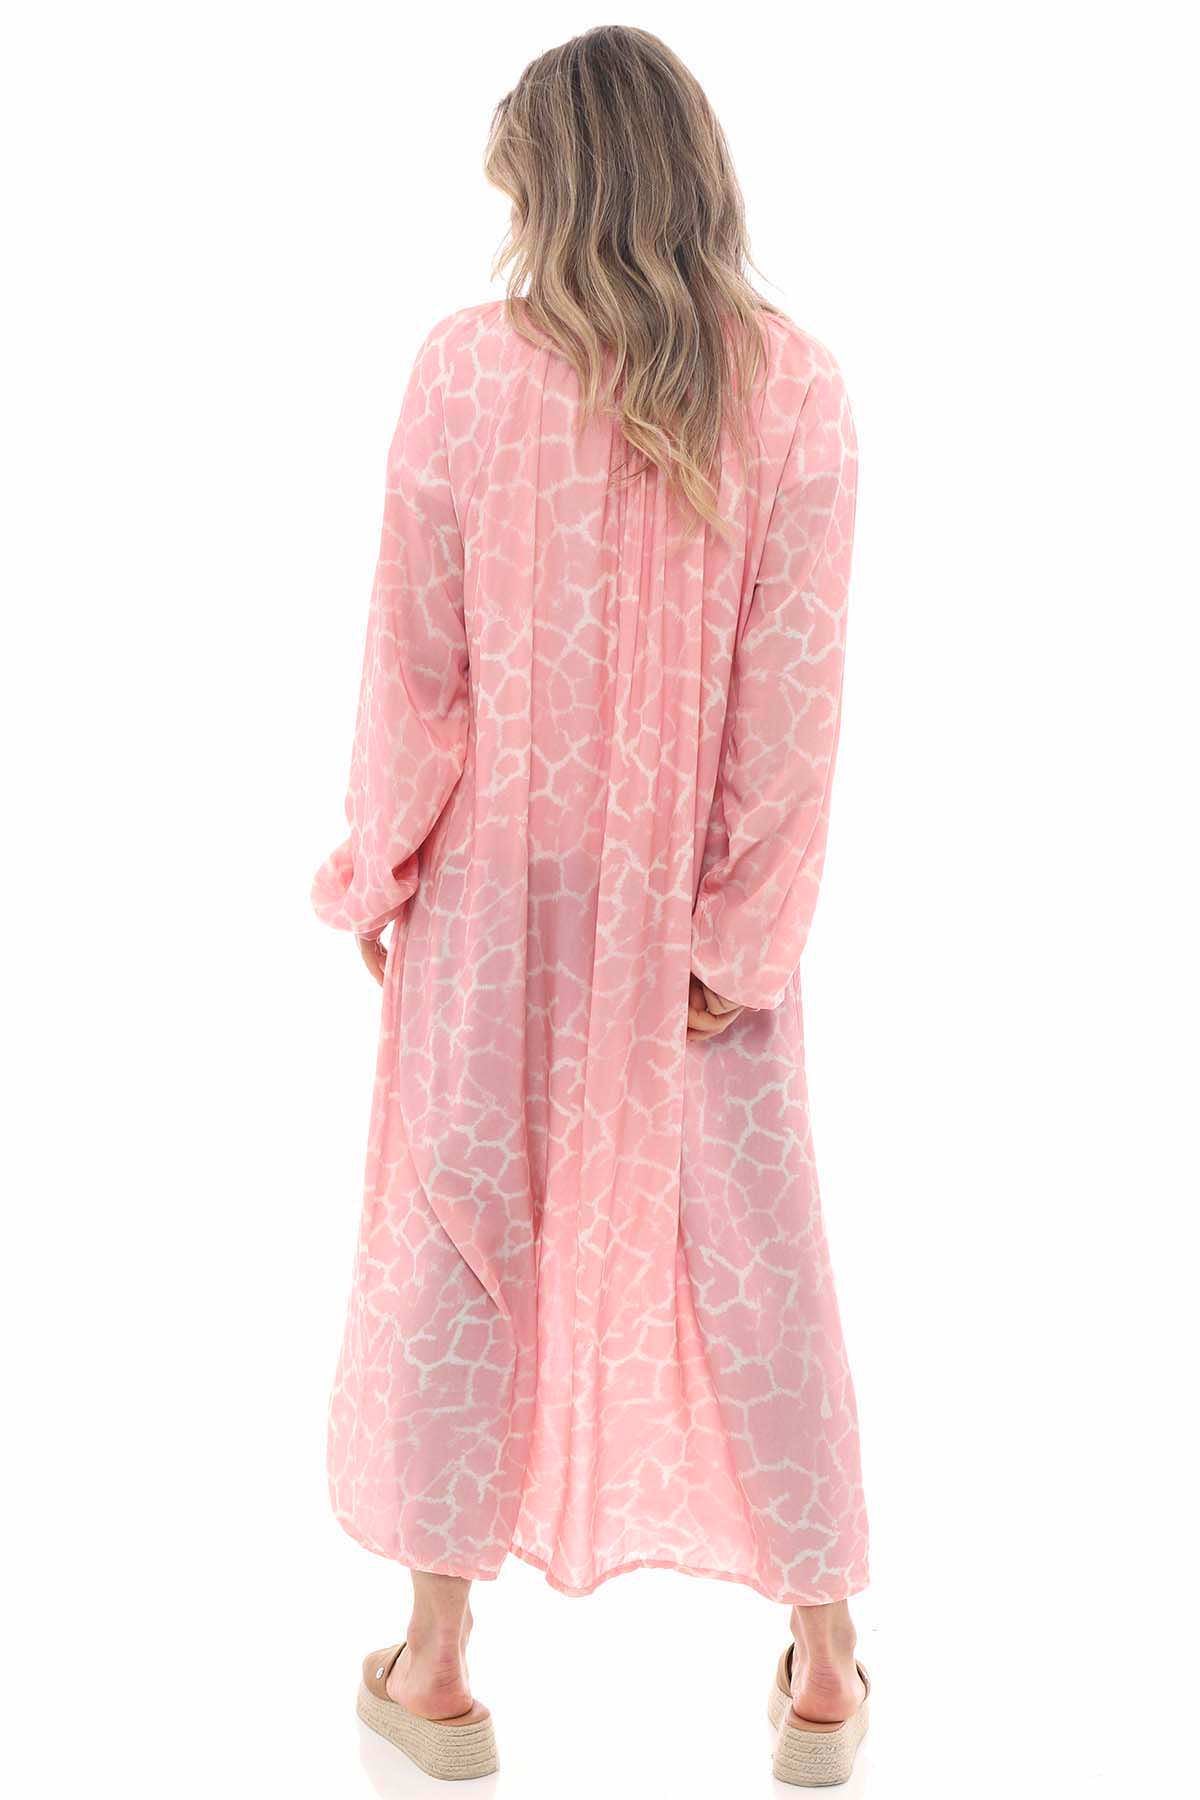 Barrie Print Dress Pink